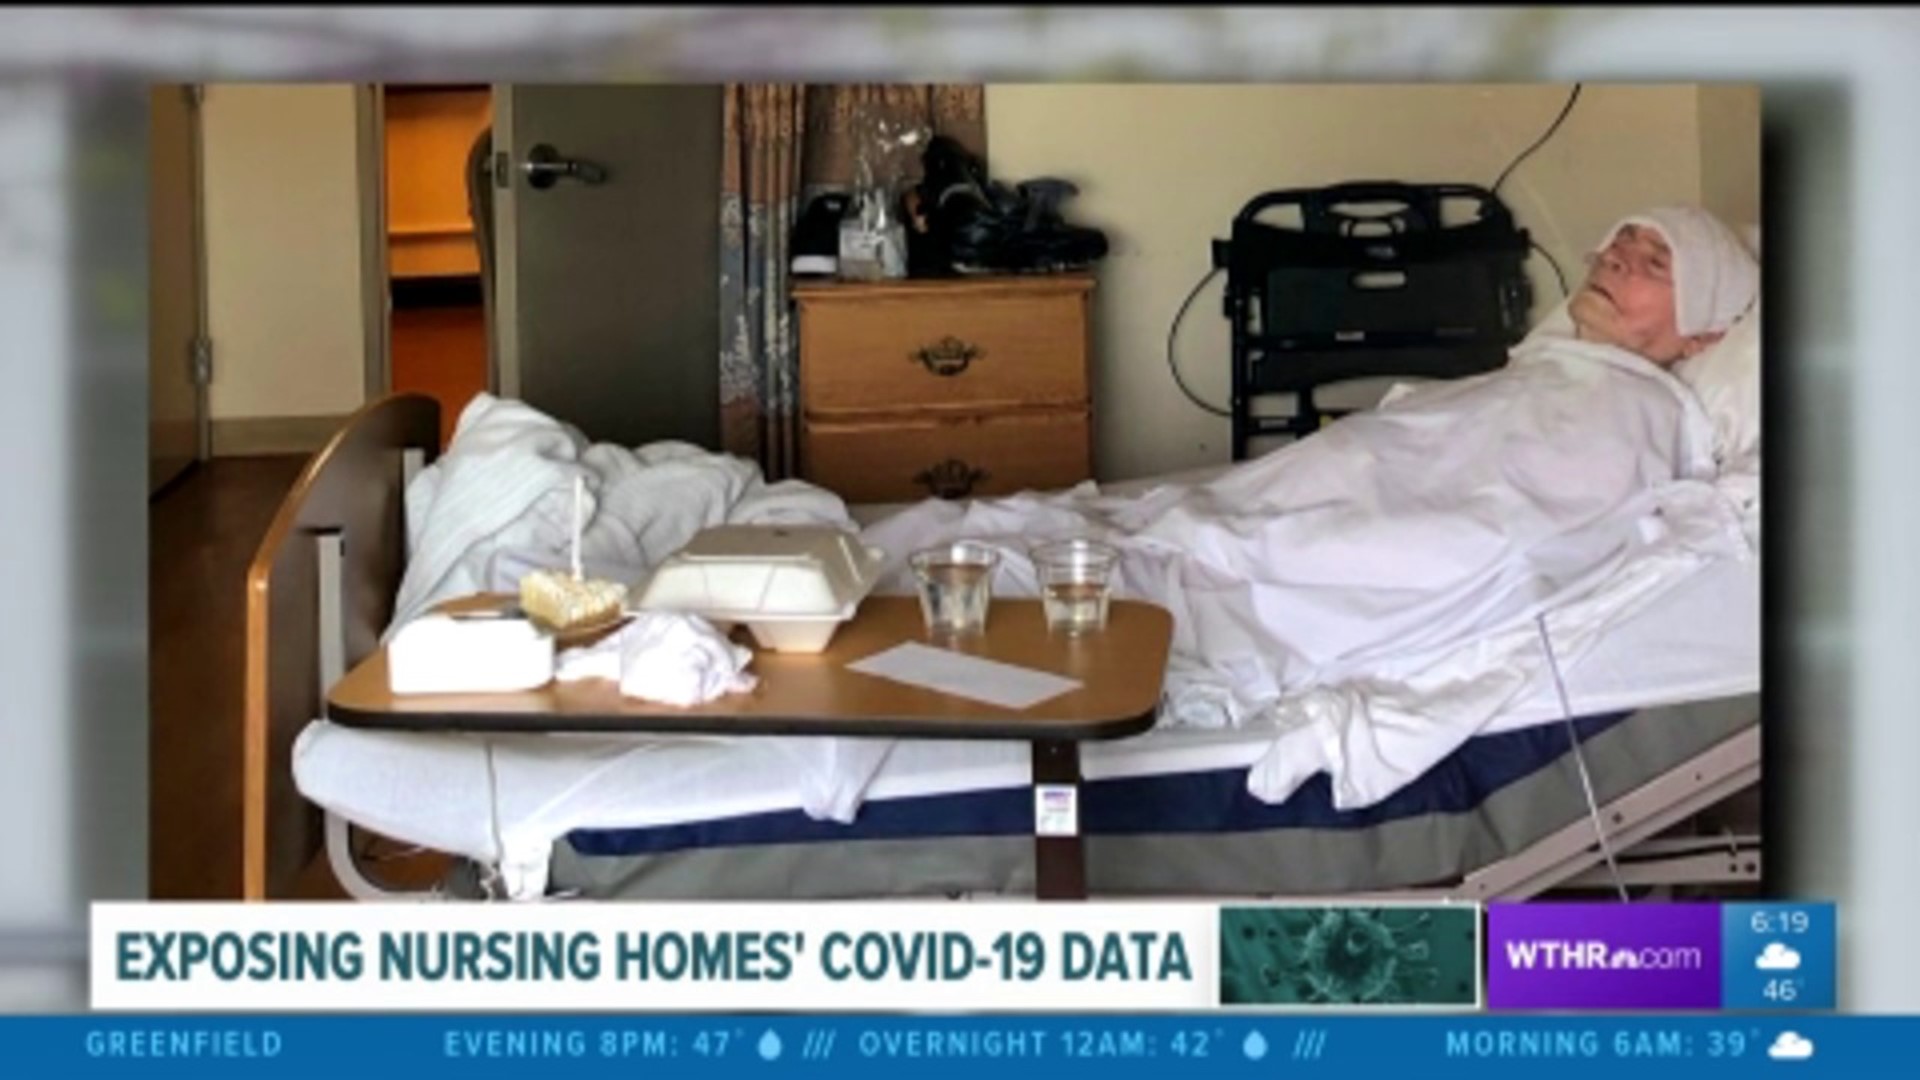 Exposing nursing homes' COVID-19 data